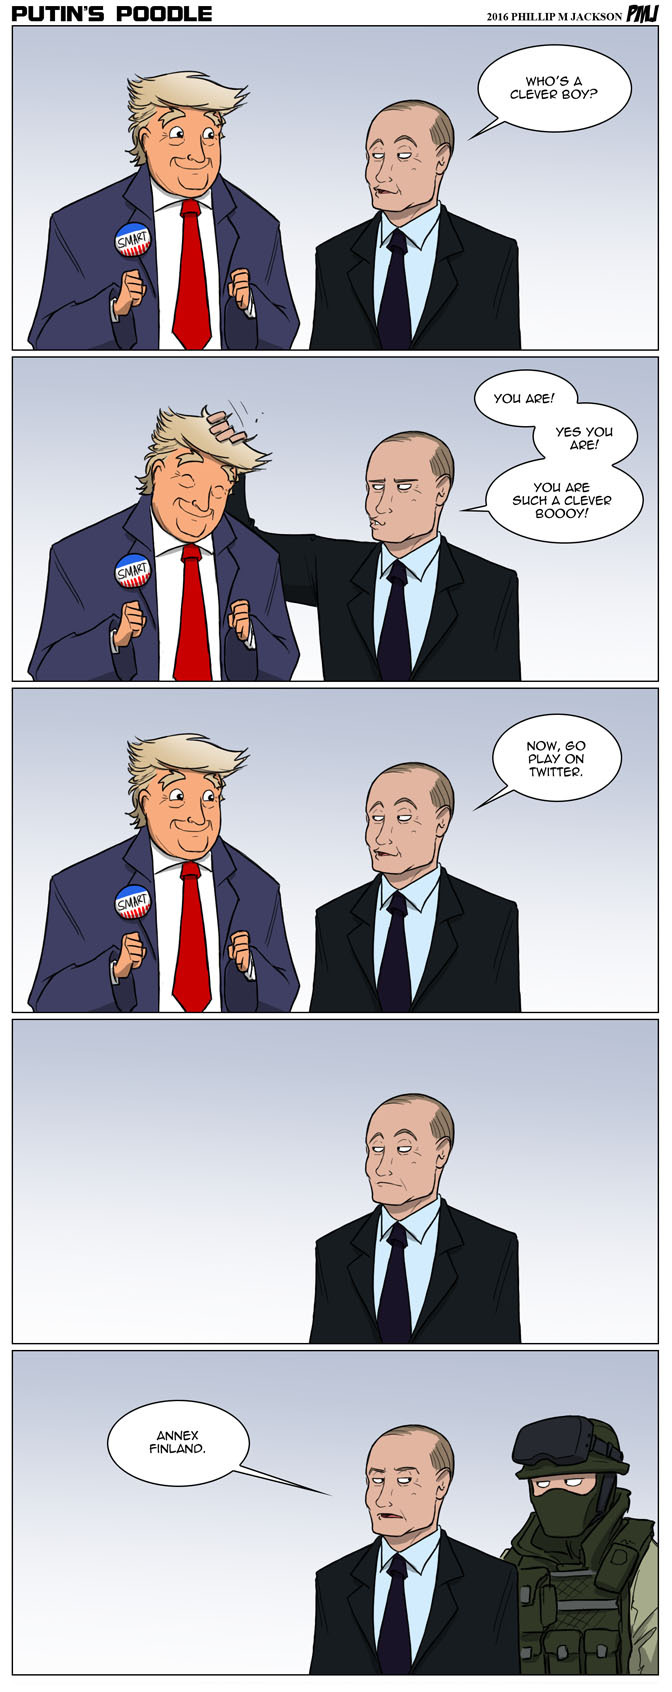 Putins' poodle - meme